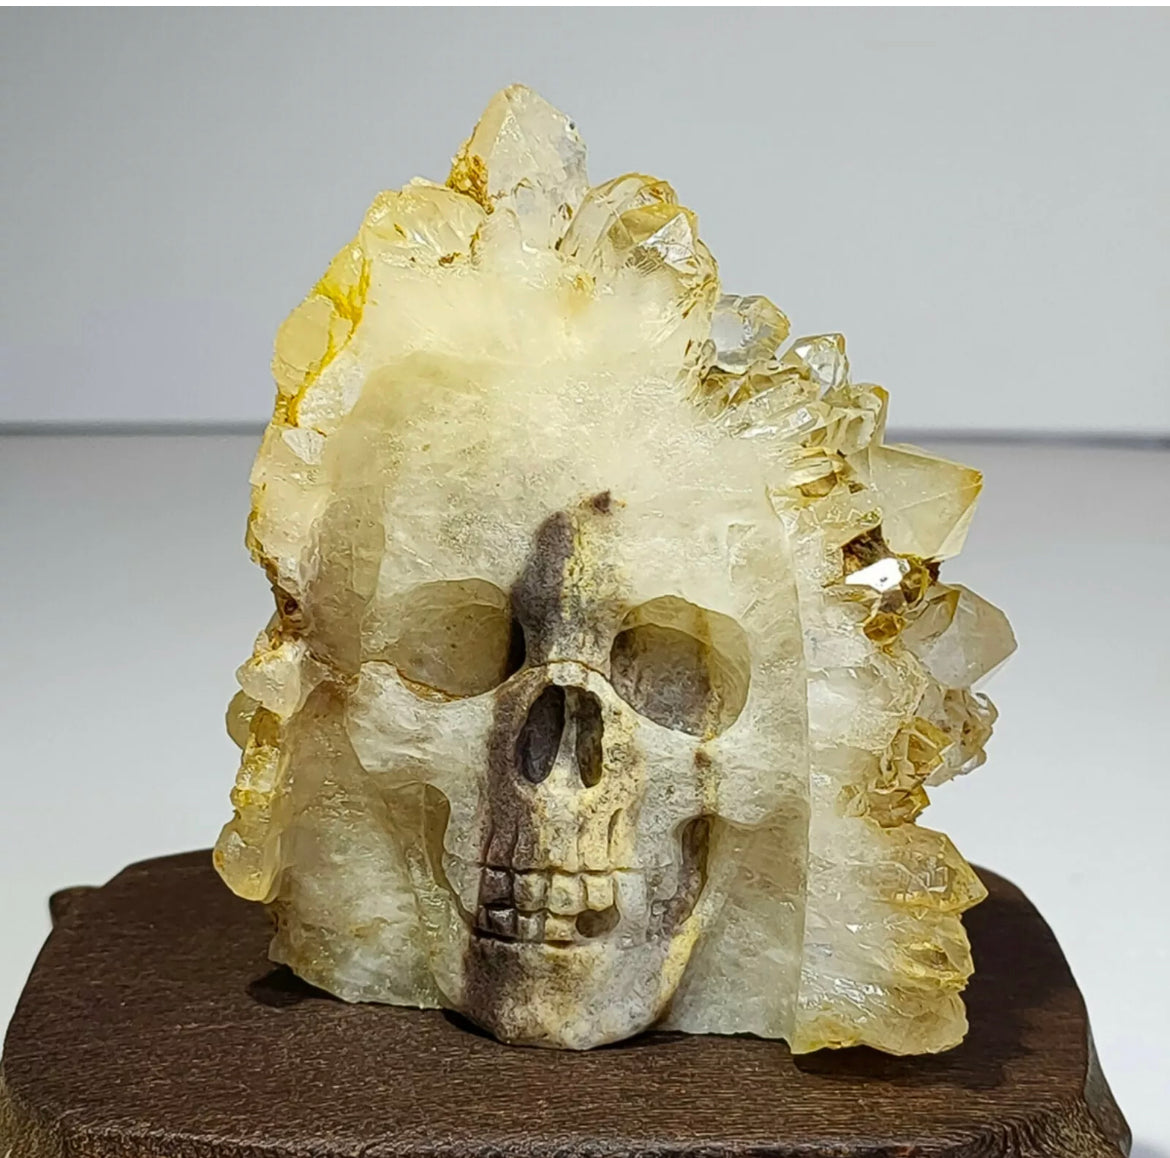 Natural Quartz Carved Skull